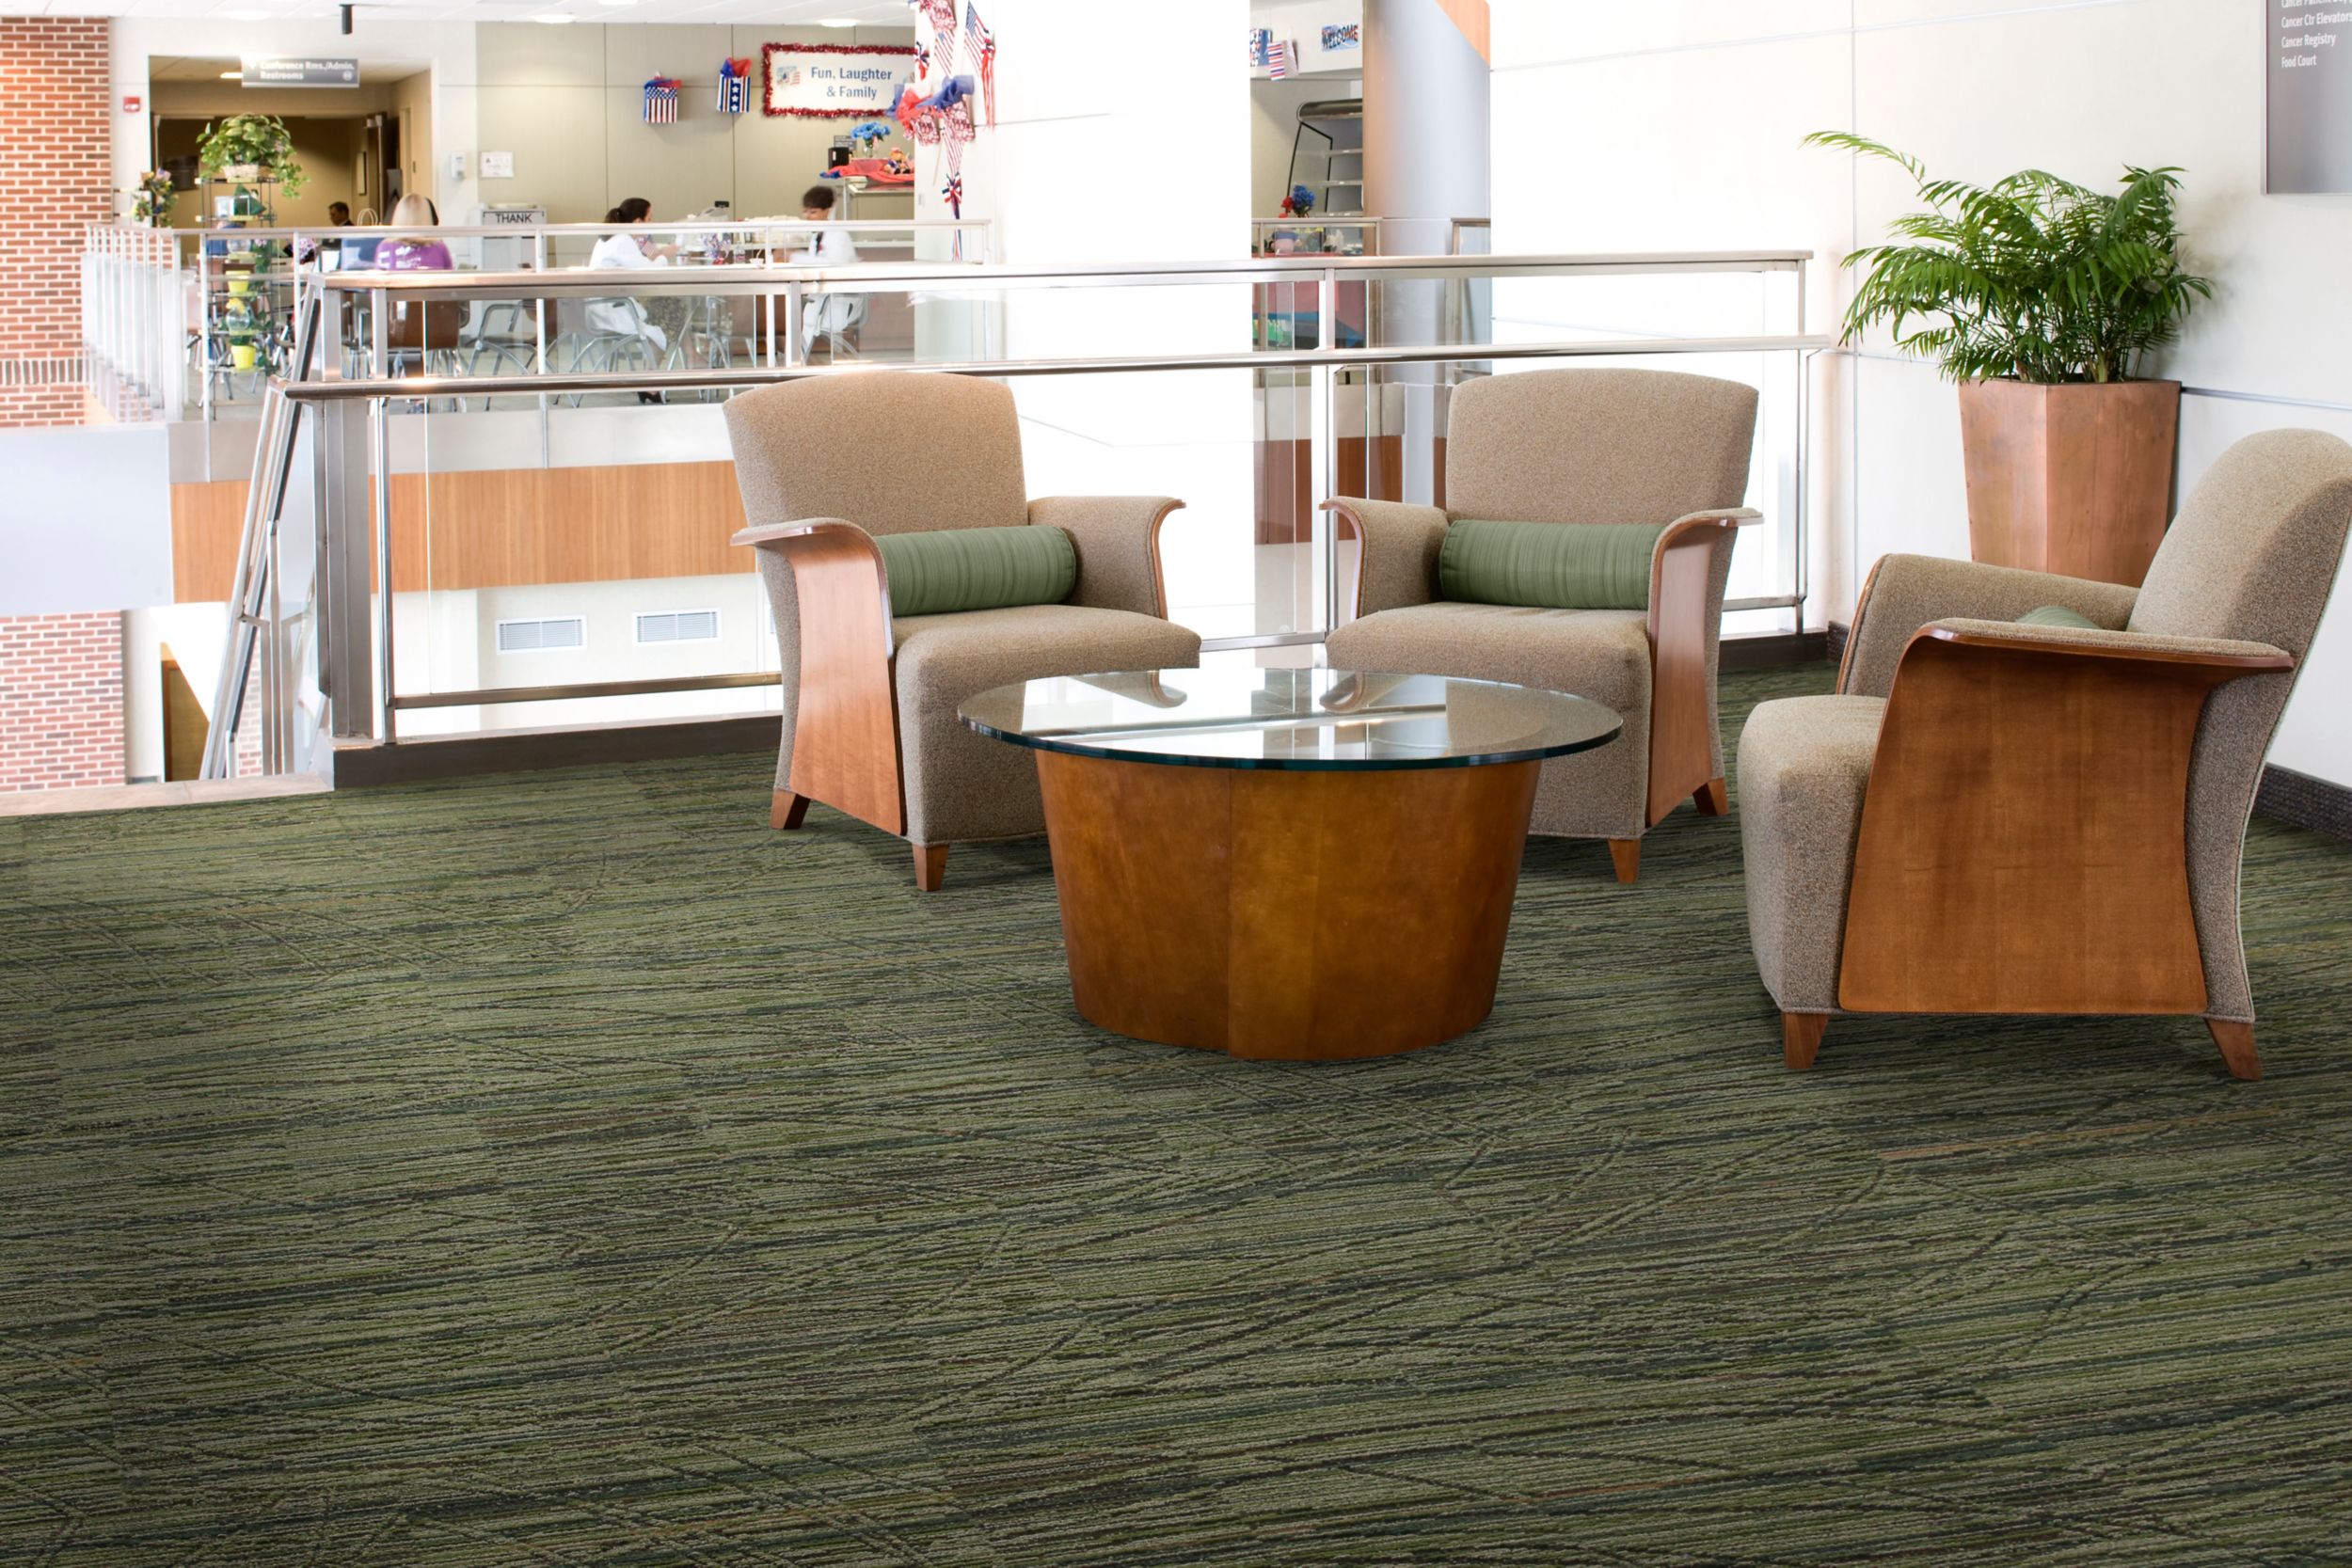 Interface Prairie Grass carpet tile in waiting area imagen número 7